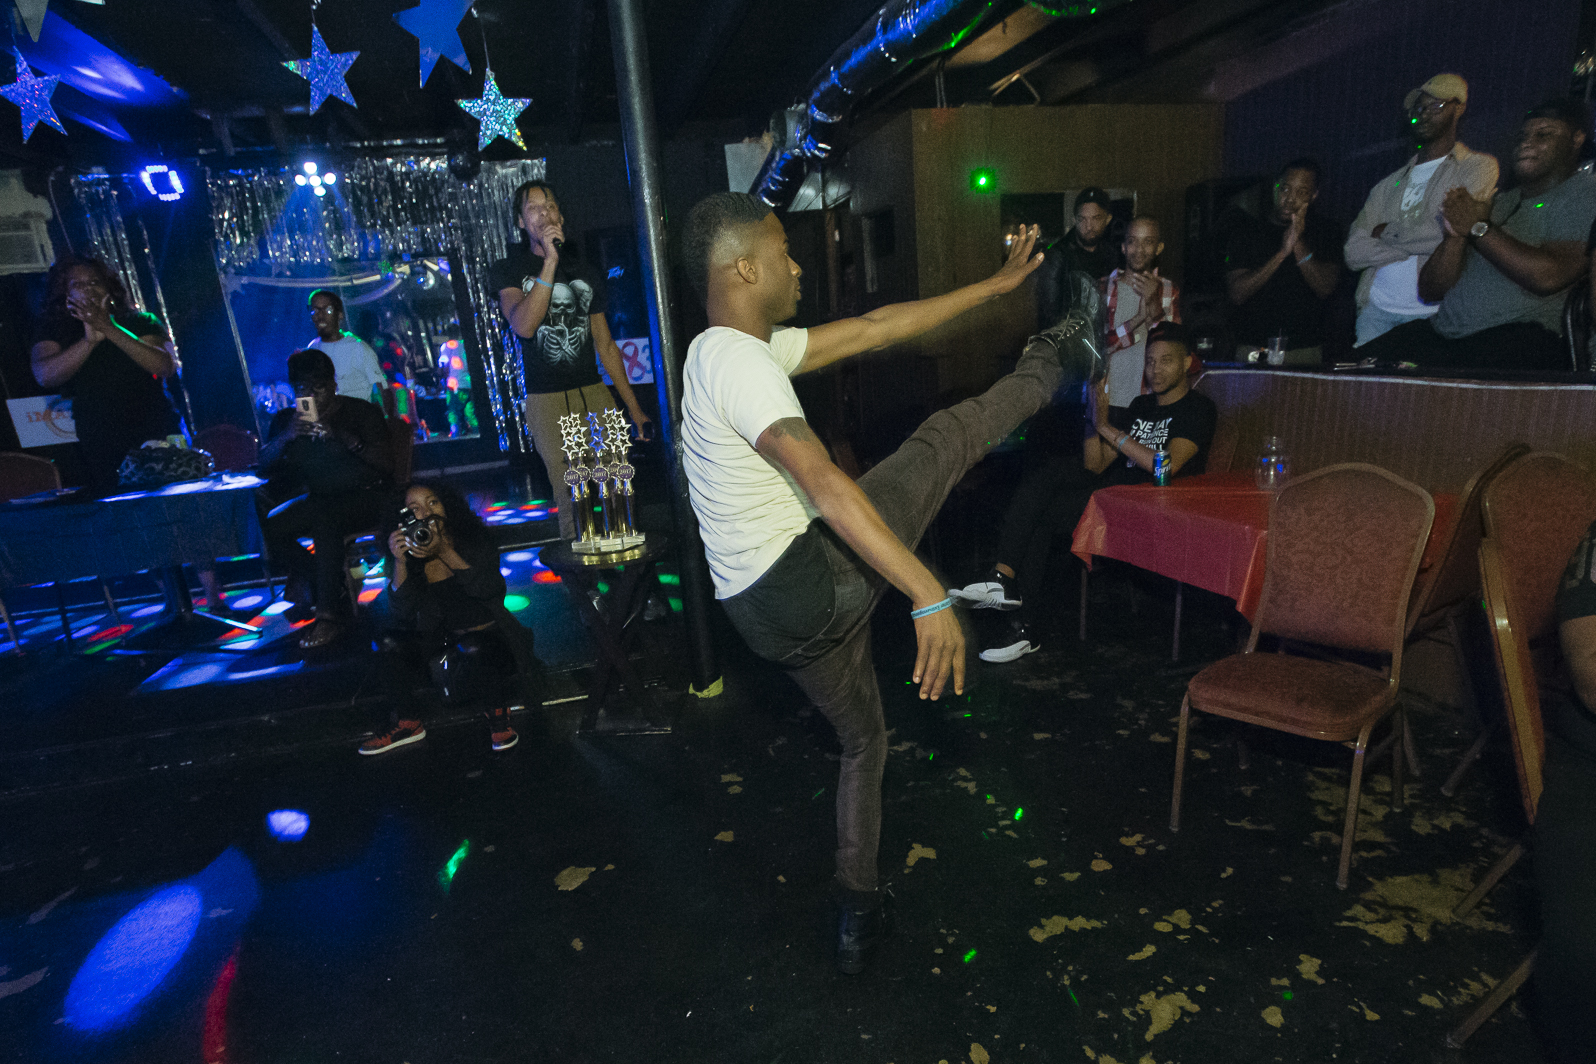 Club patrons dance and vogue as part of a Kiki Ball at Club Memphis.